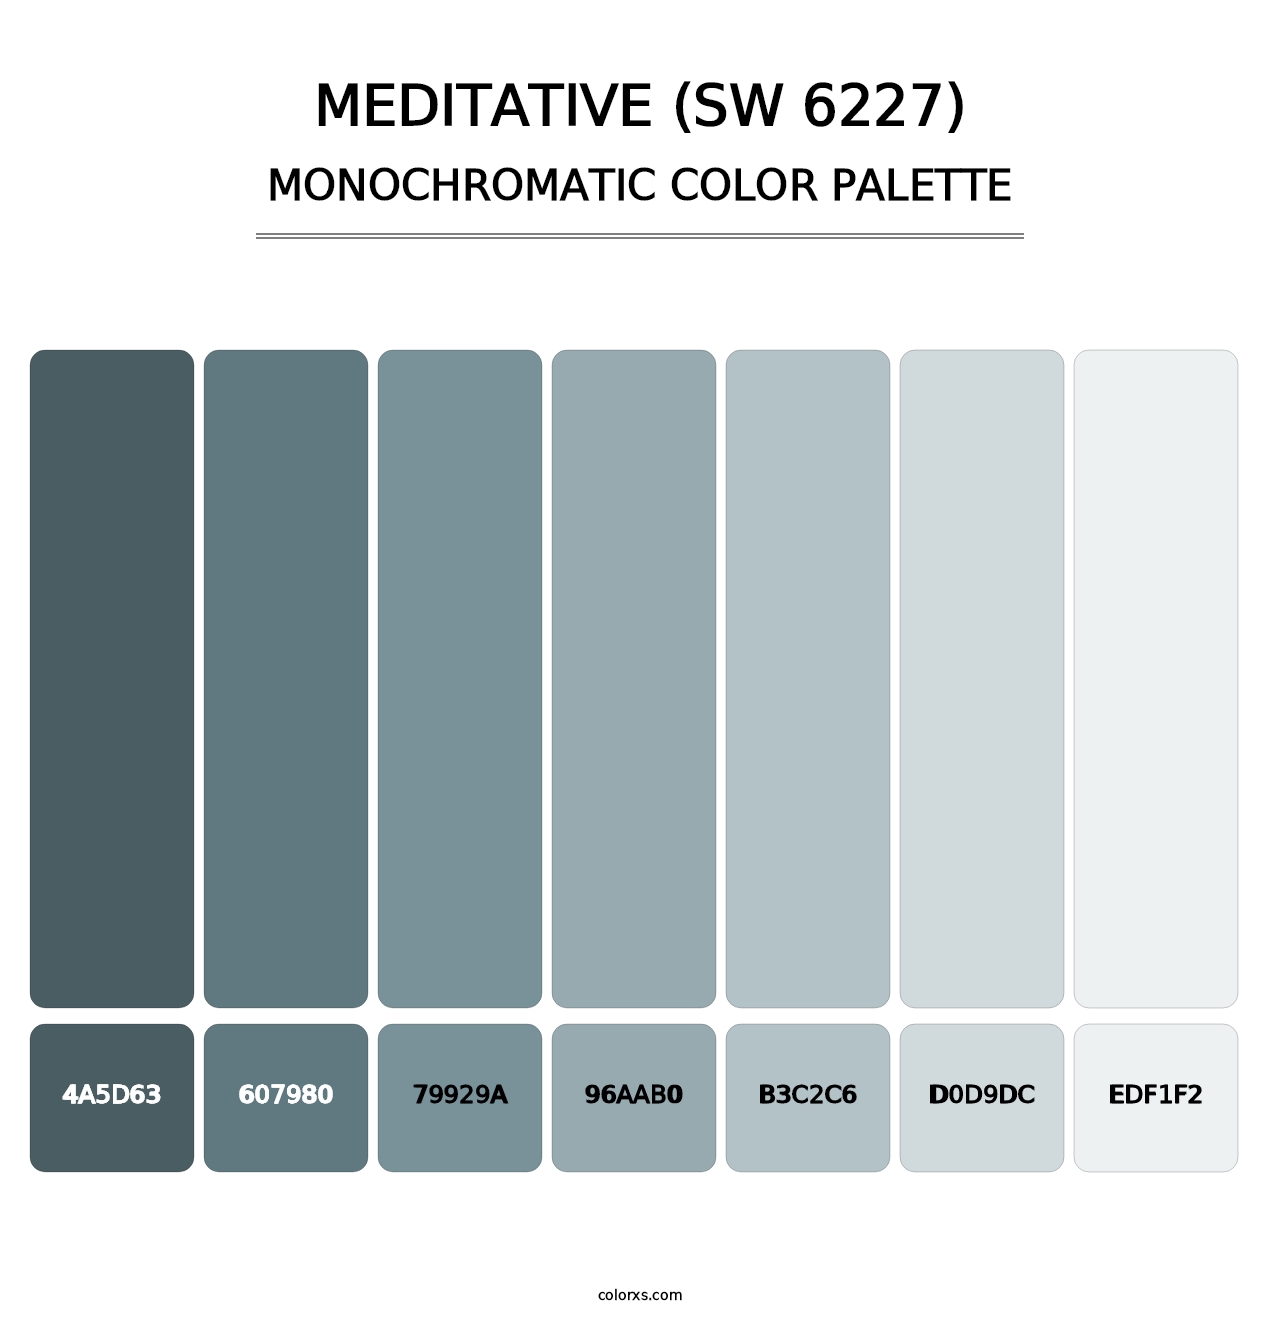 Meditative (SW 6227) - Monochromatic Color Palette